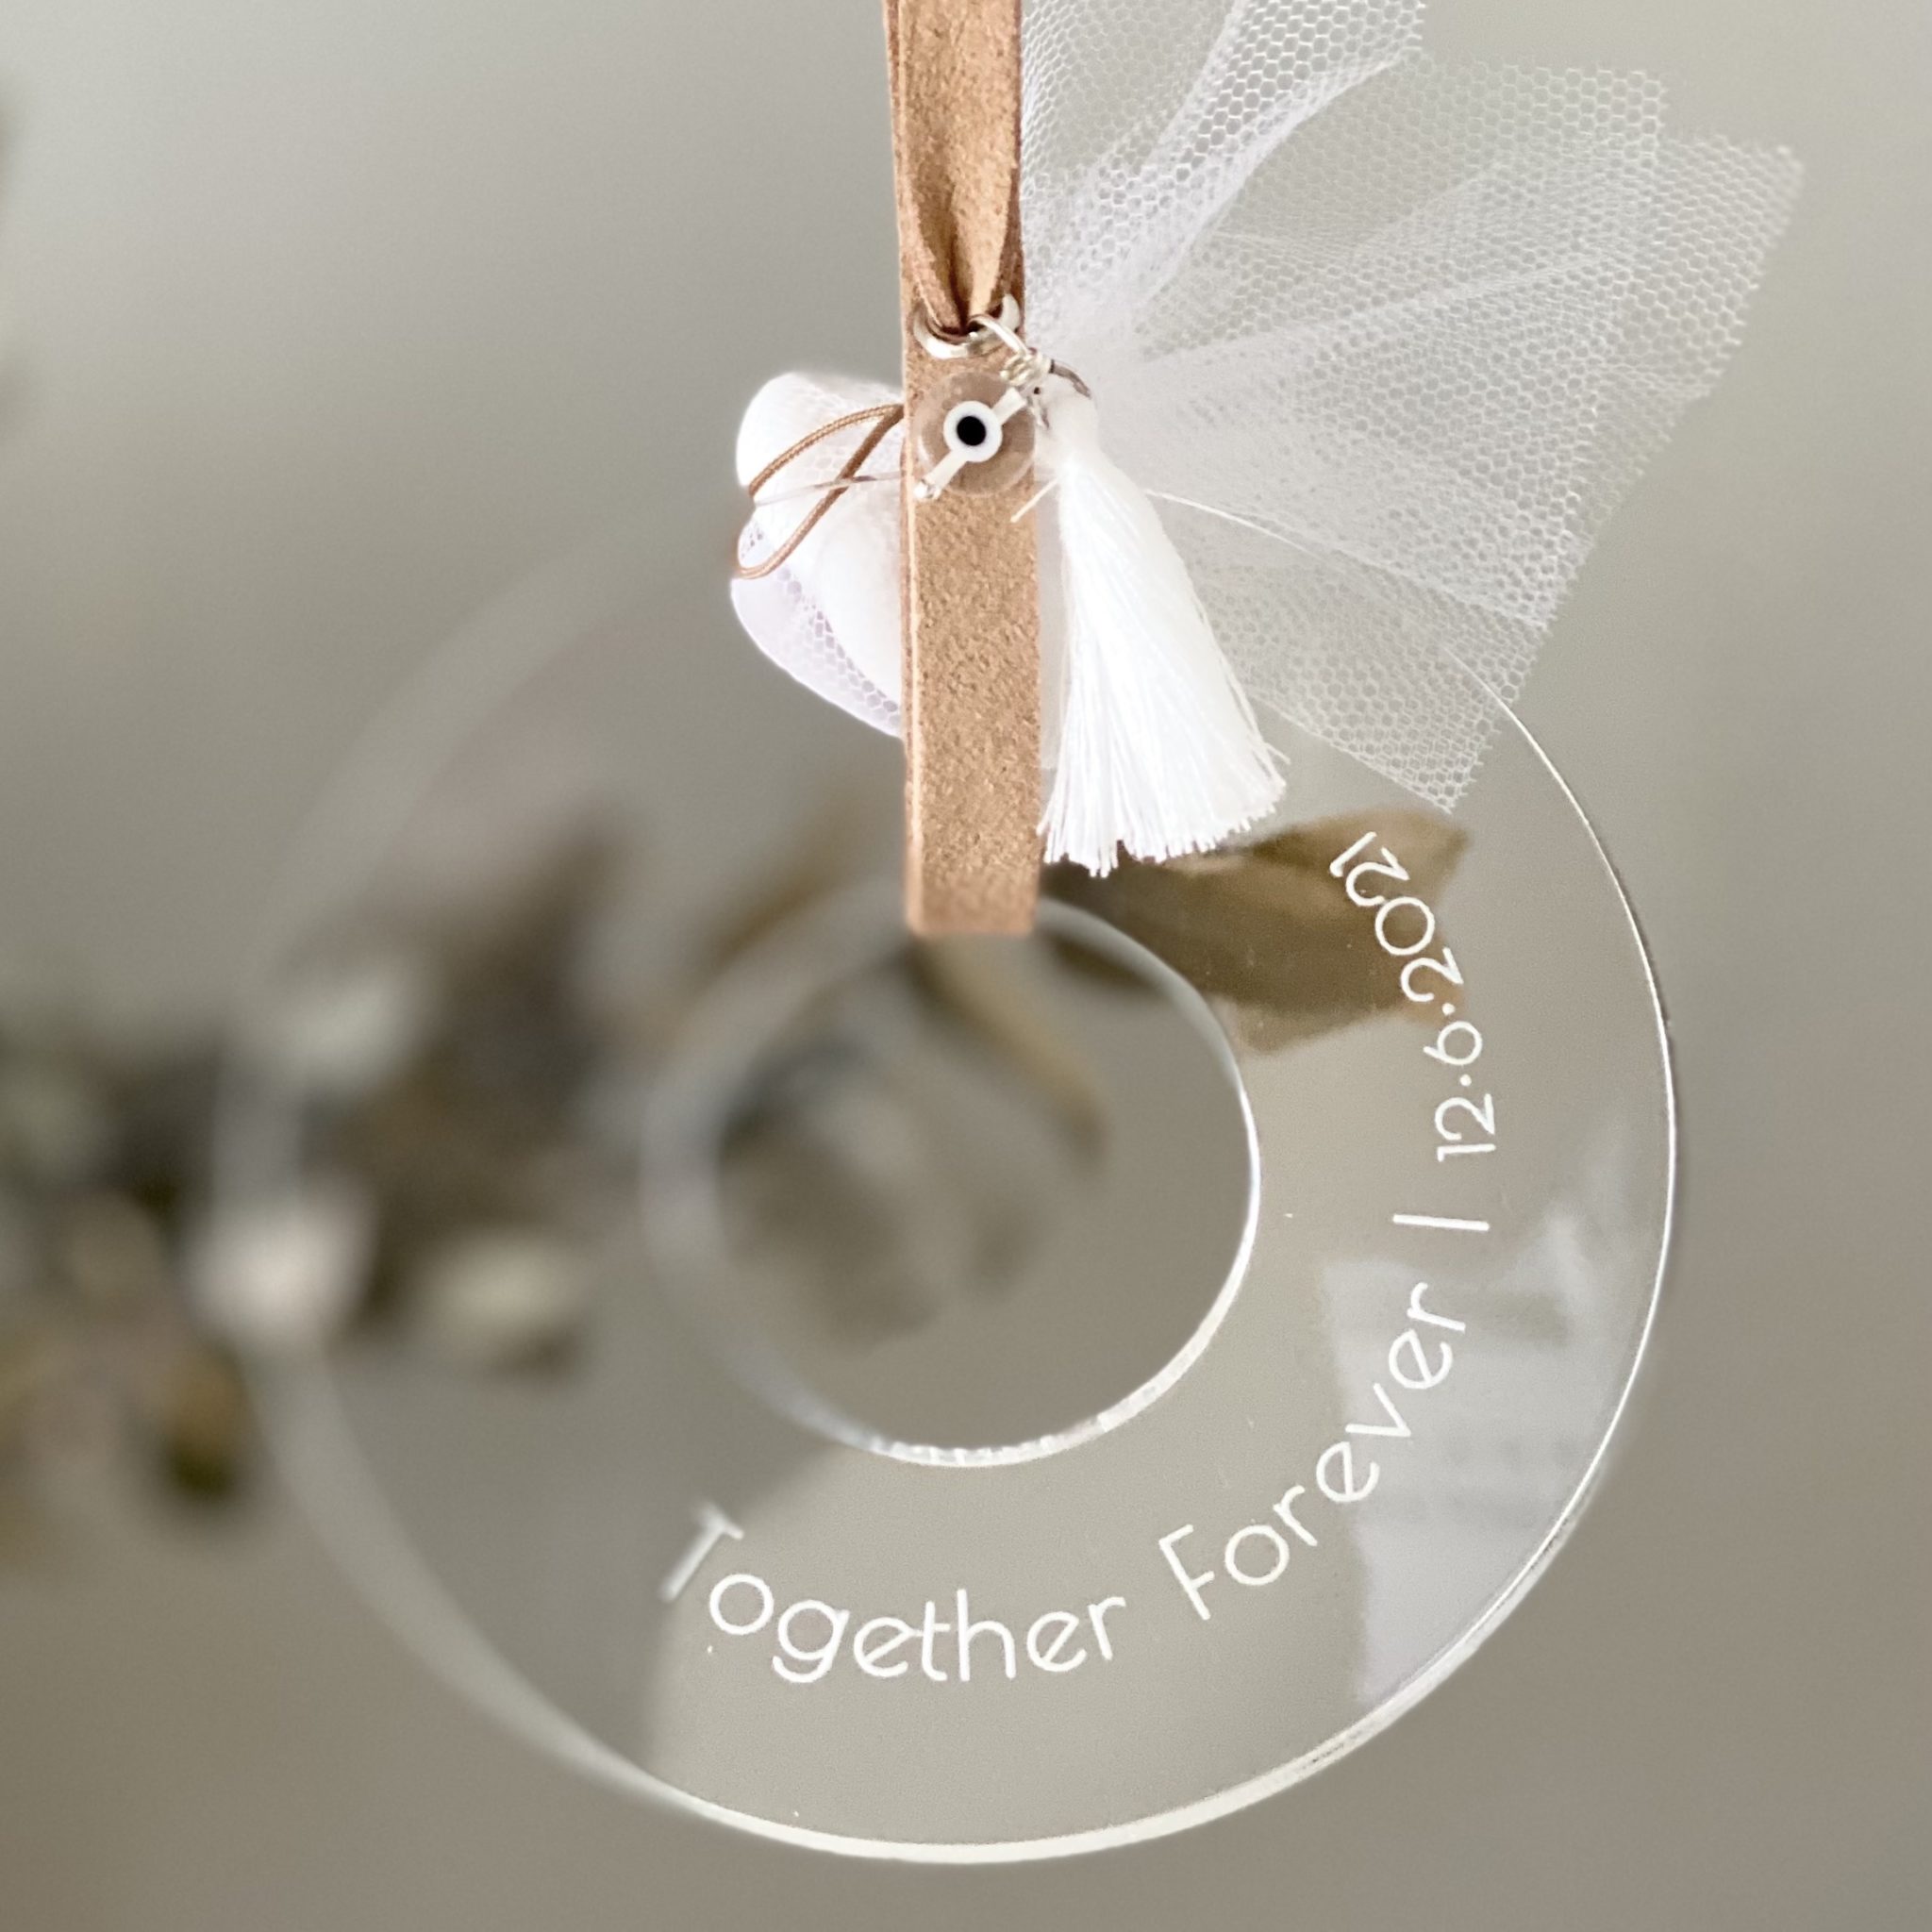 together-forever-wedding-favor-engraved-plexiglass-main-photo